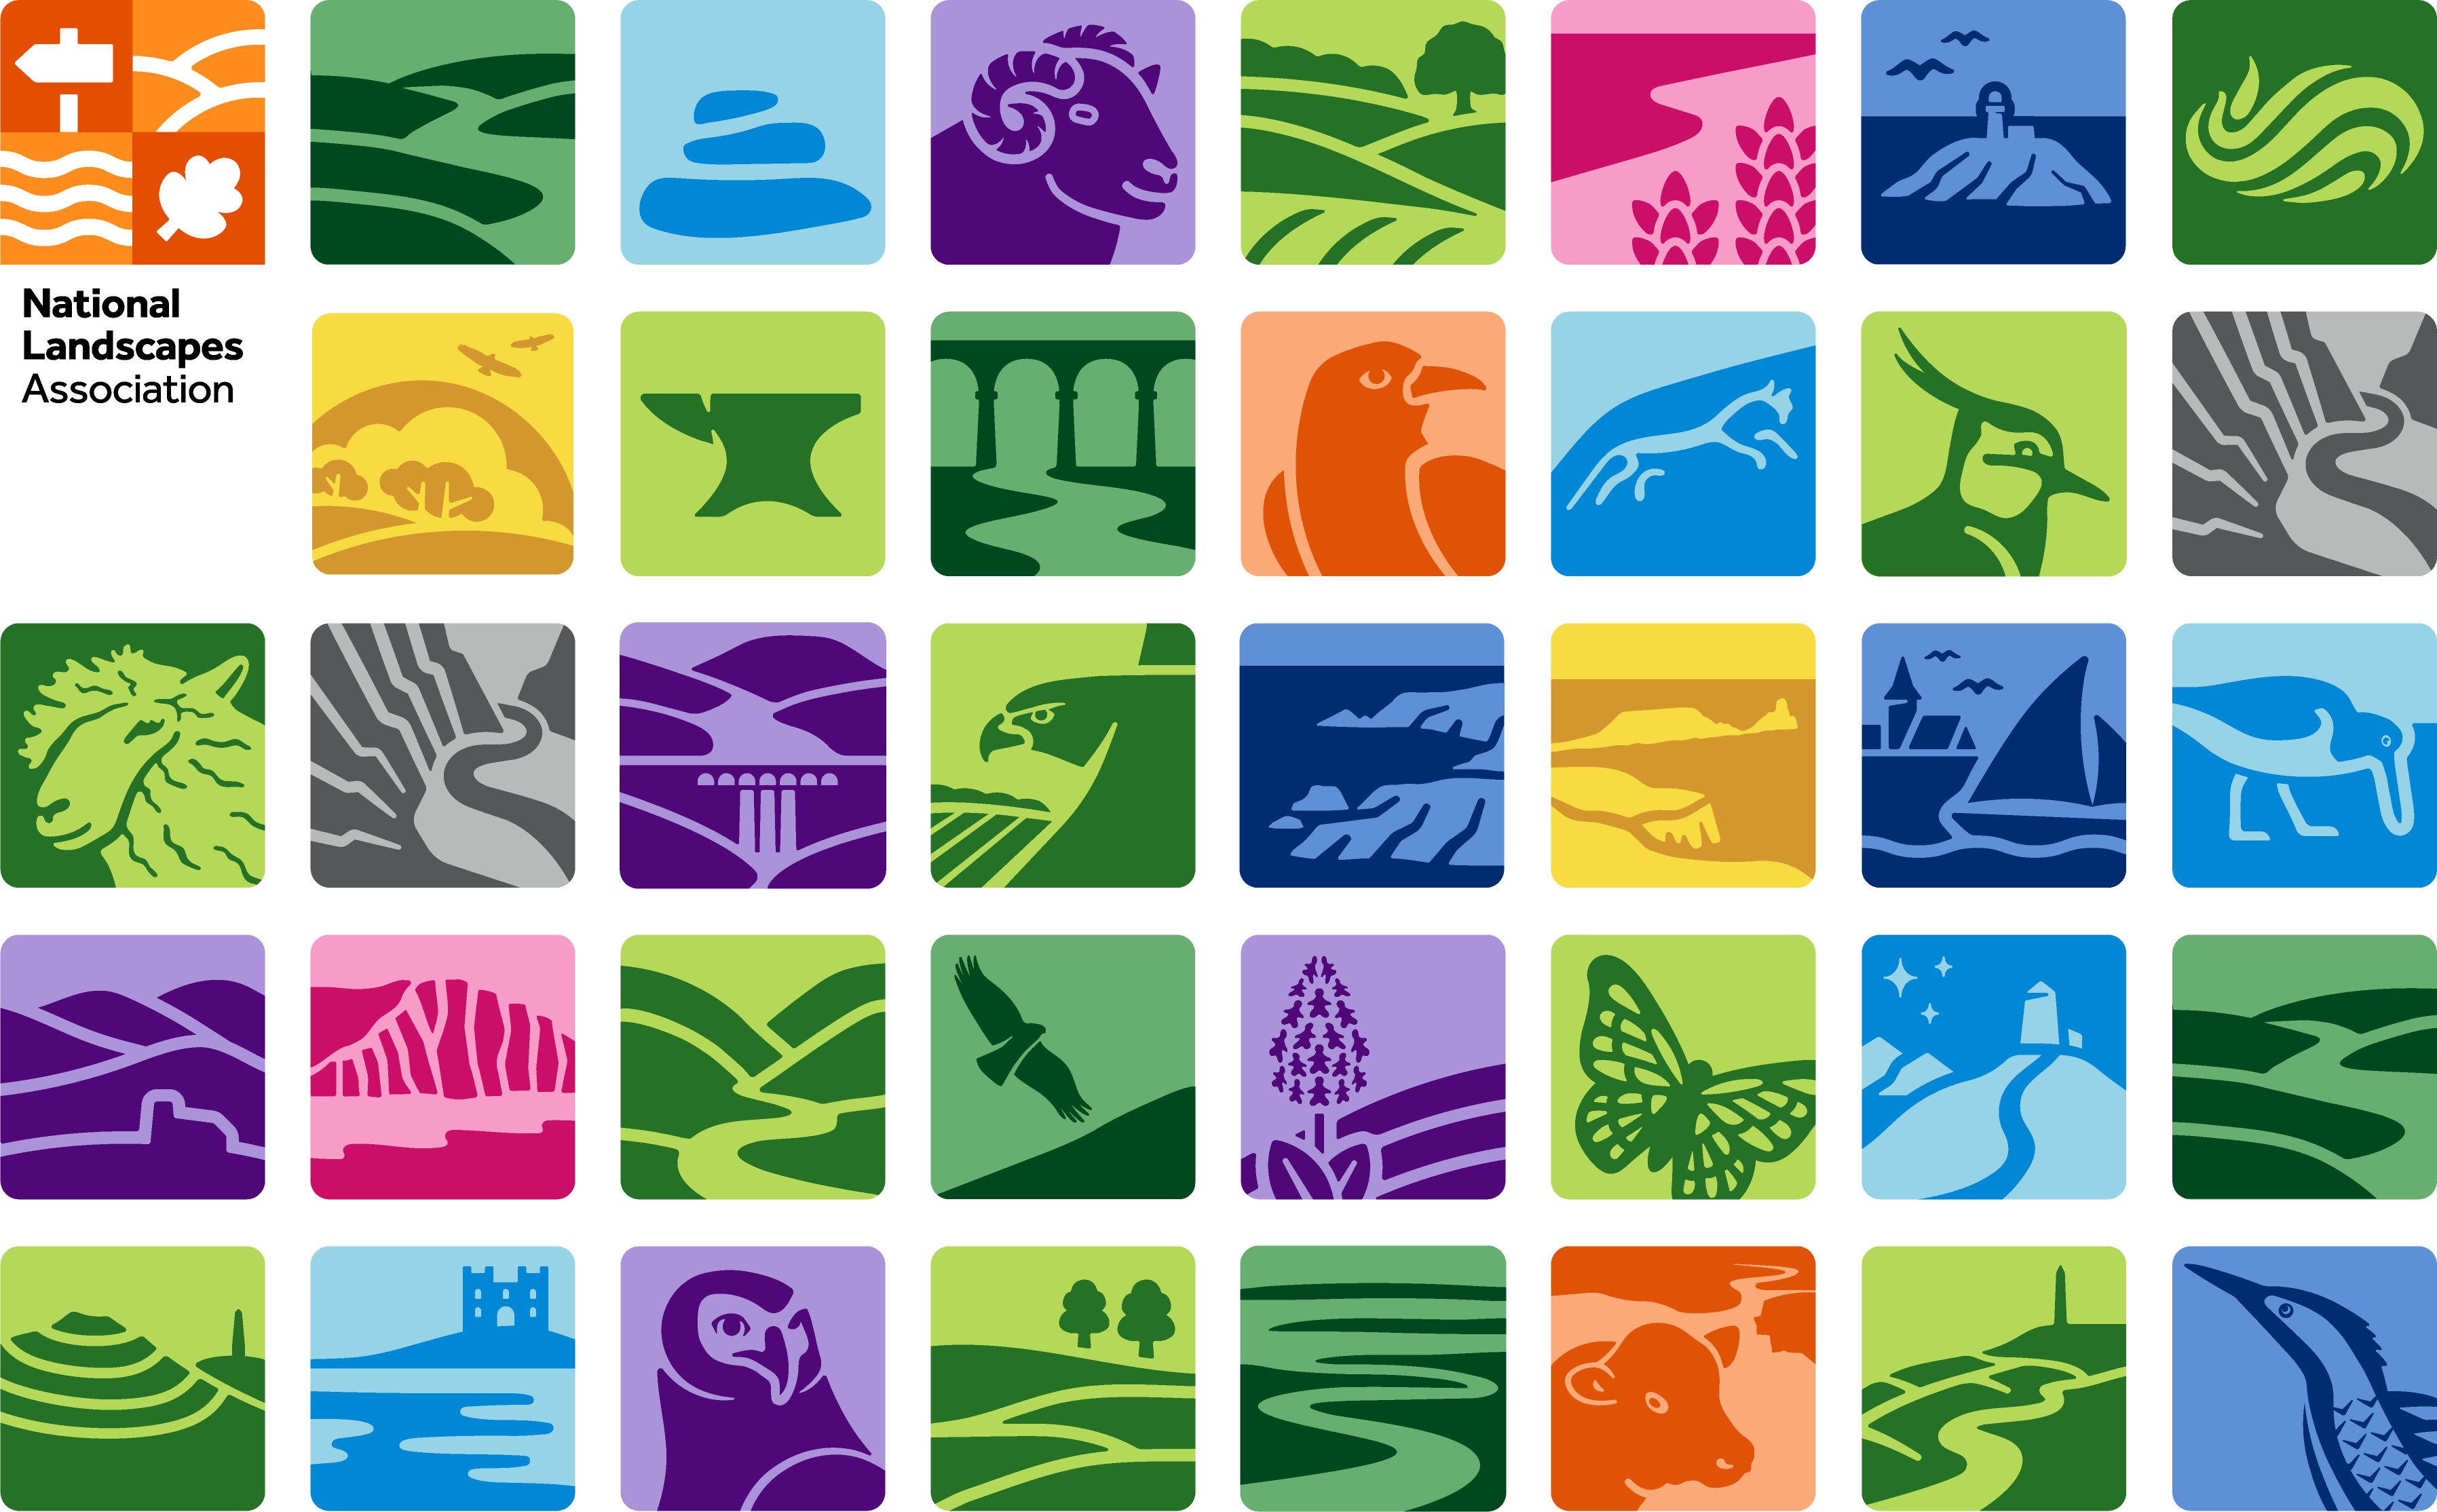 A mosaic of colourful logos